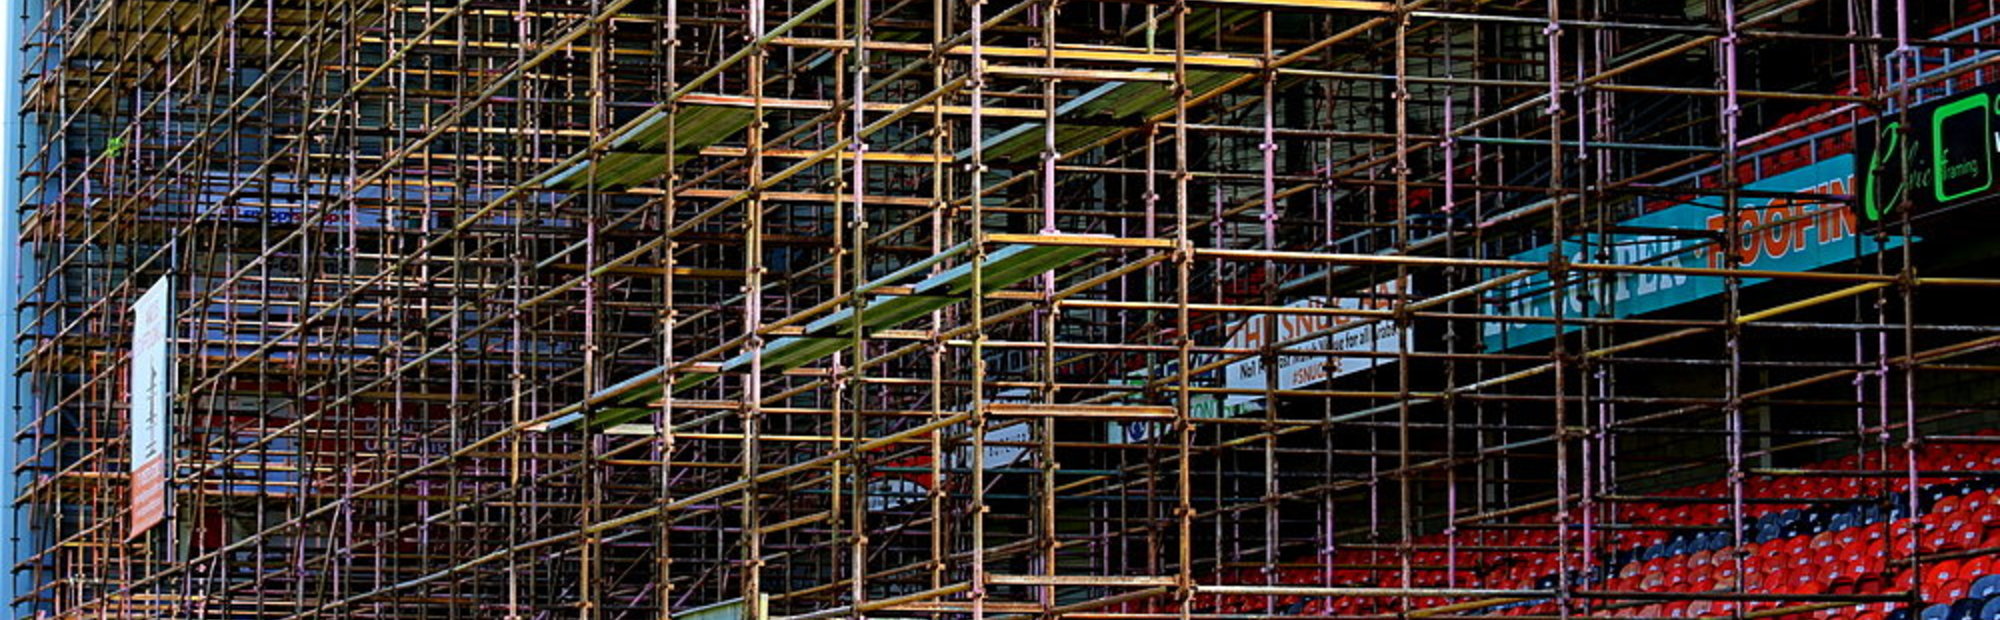 Eddie Thompson scaffolding in place